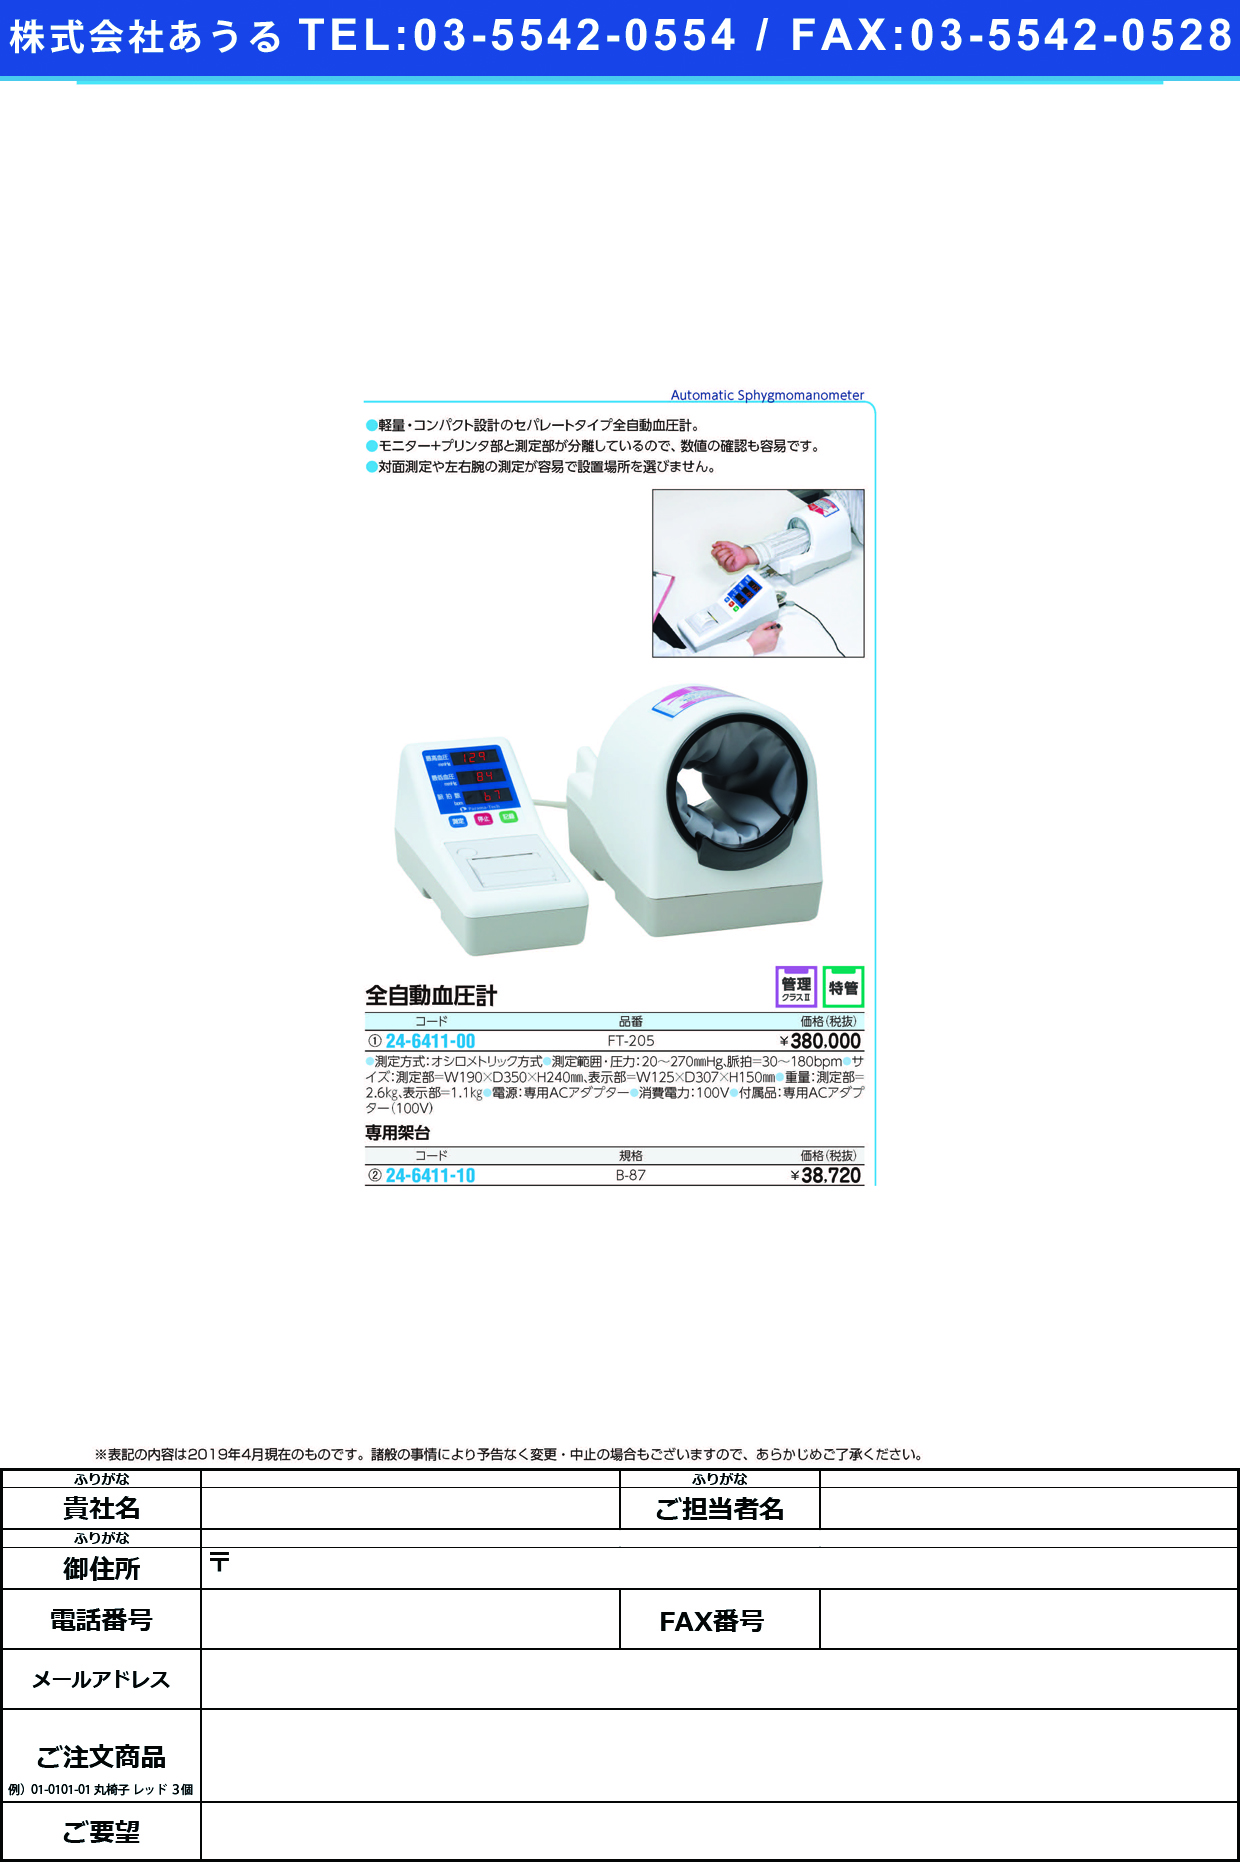 (24-6411-00)全自動血圧計 FT-205 ｾﾞﾝｼﾞﾄﾞｳｹﾂｱﾂｹｲ【1台単位】【2019年カタログ商品】